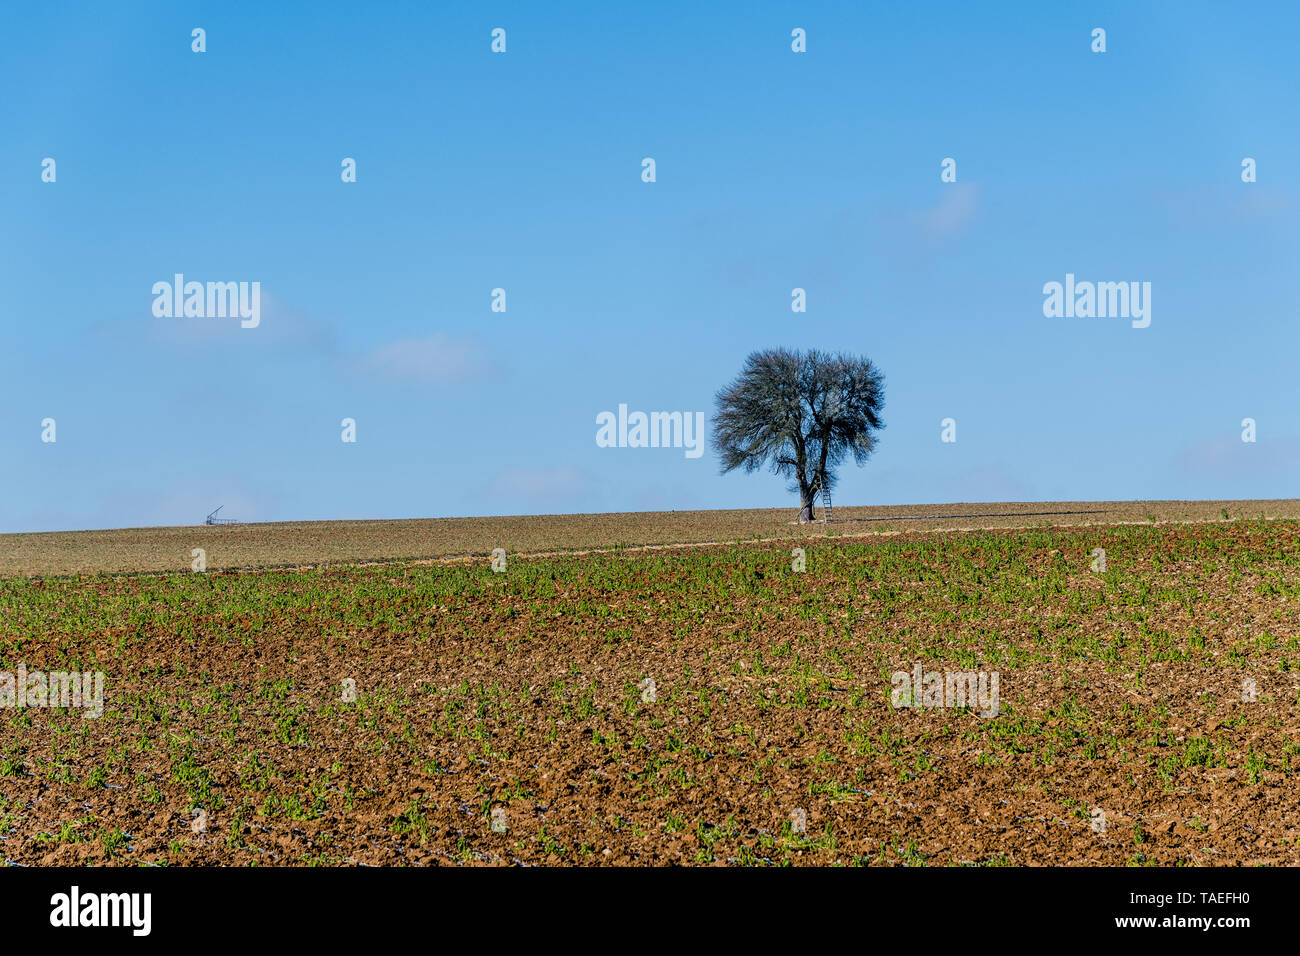 Germany, Baden-Wuerttemberg, Taubertal, single tree in field Stock Photo